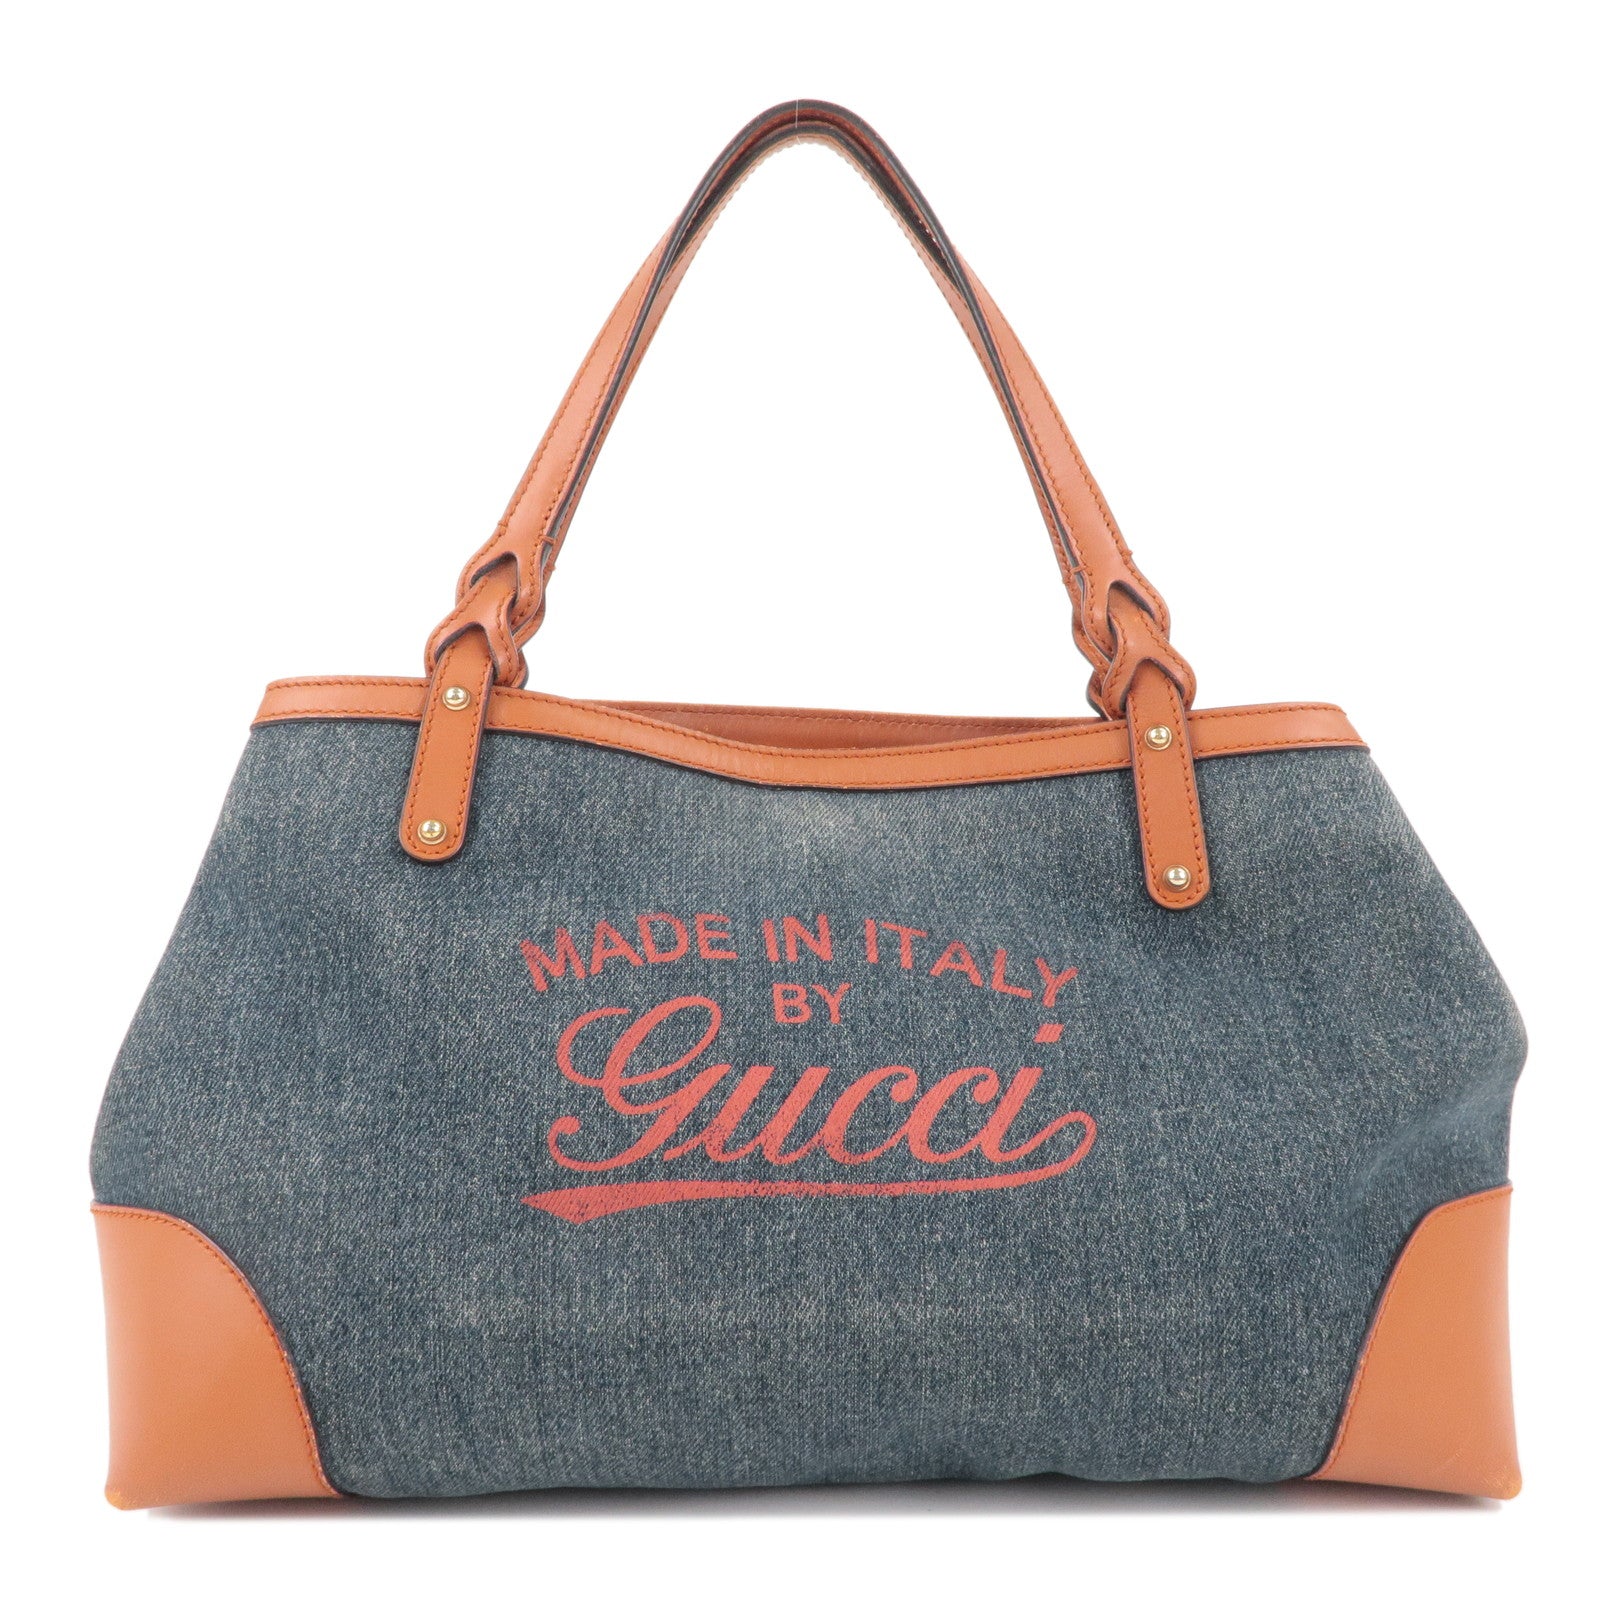 Gucci Women's Bag - Navy